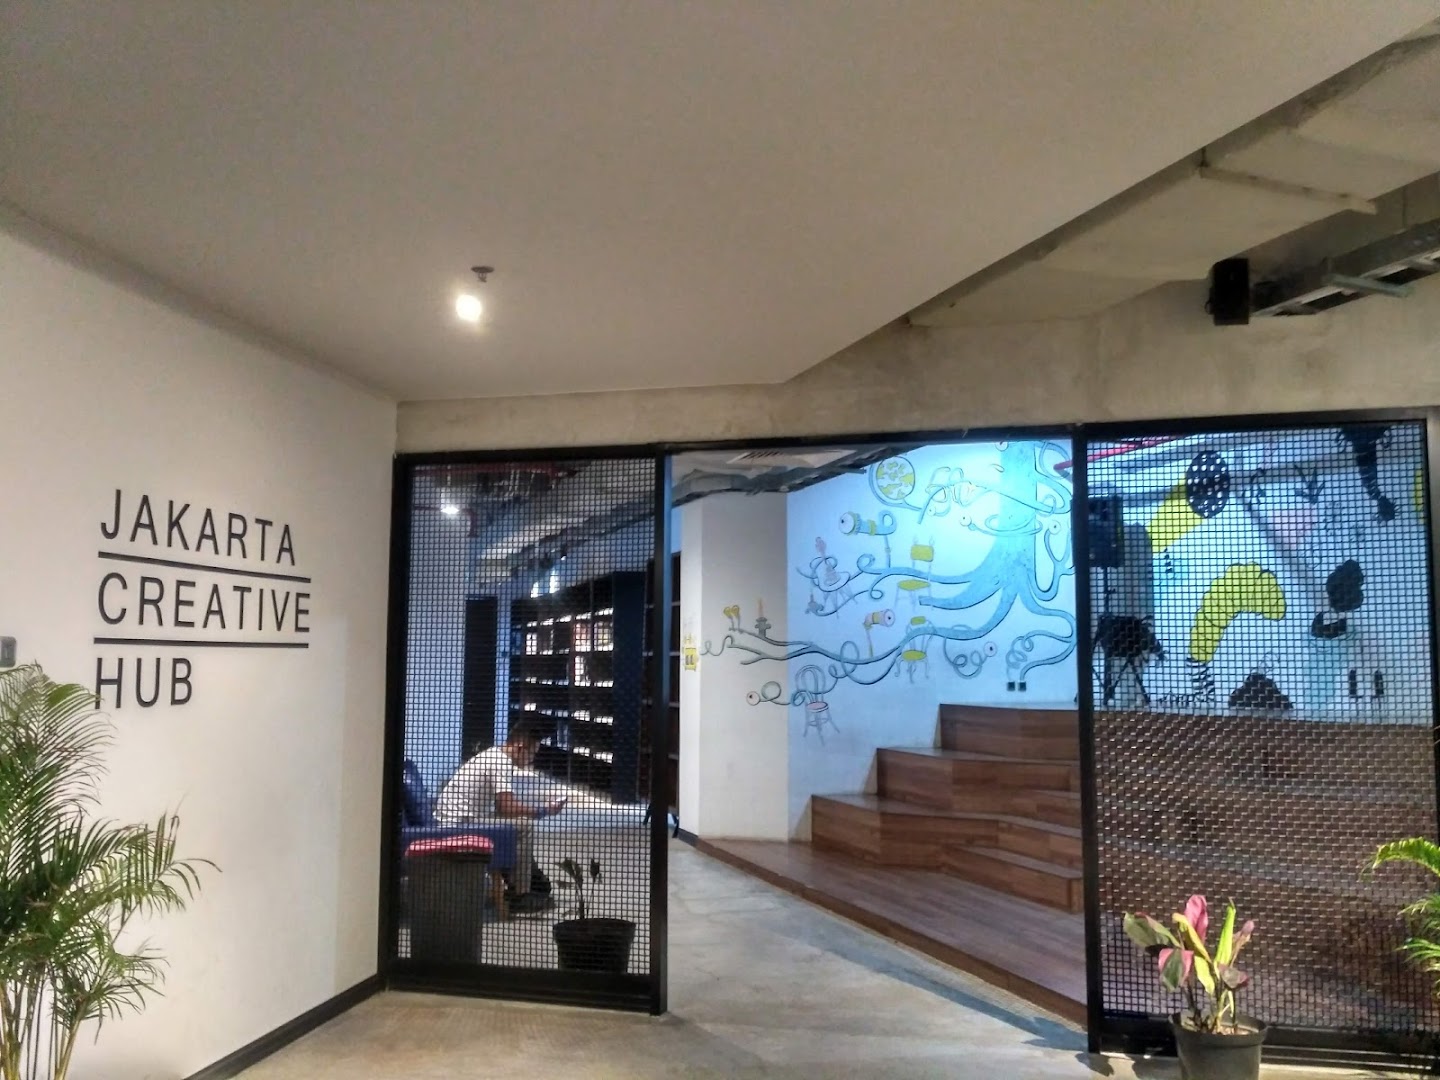 Jakarta Creative Hub Photo